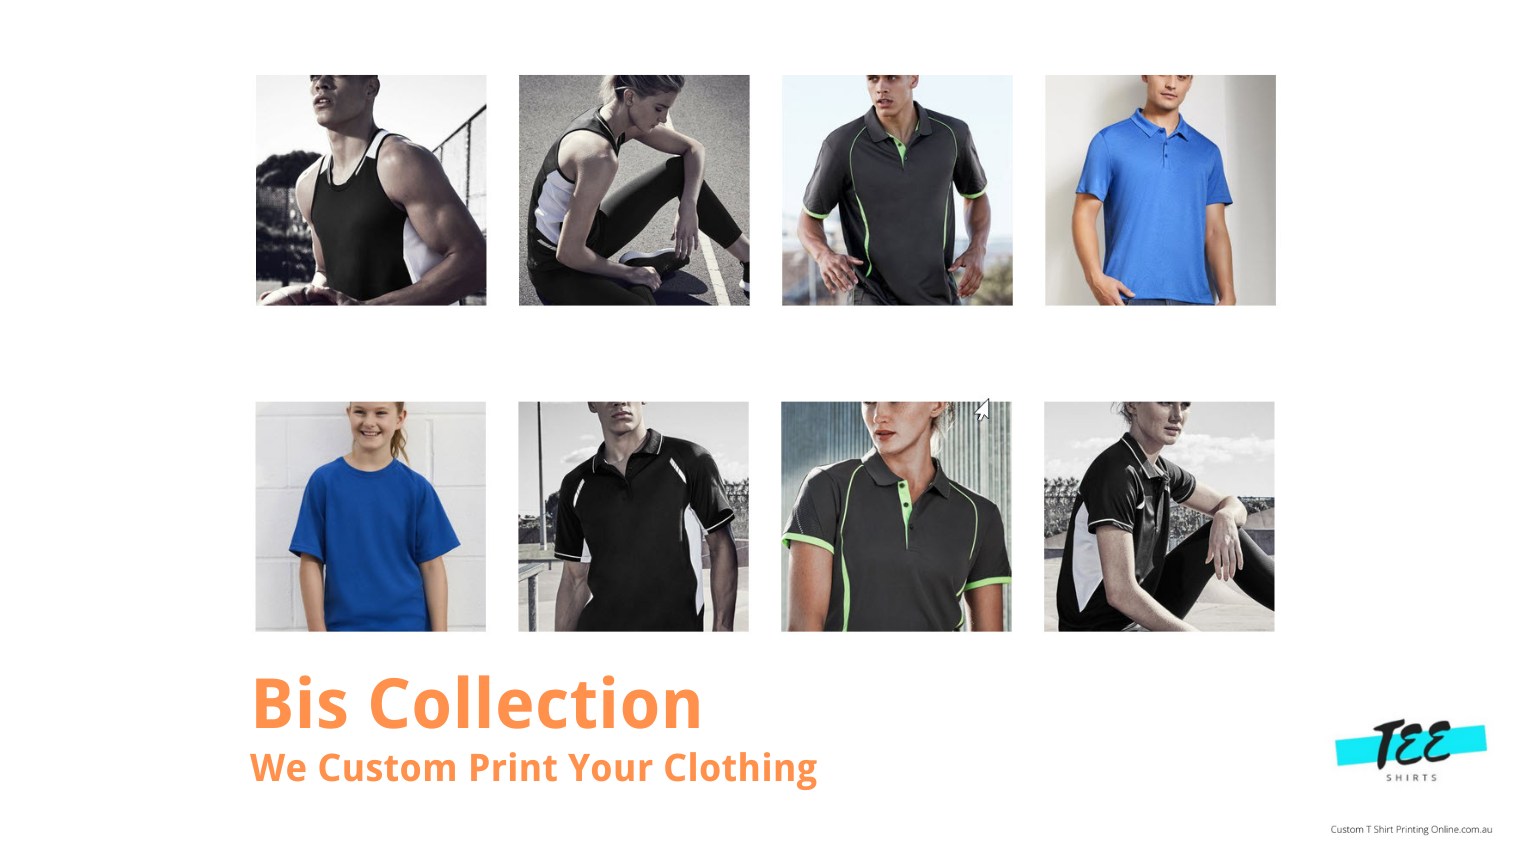 Local Brisbane Printing Company Offers Biz Collection Activewear Customization